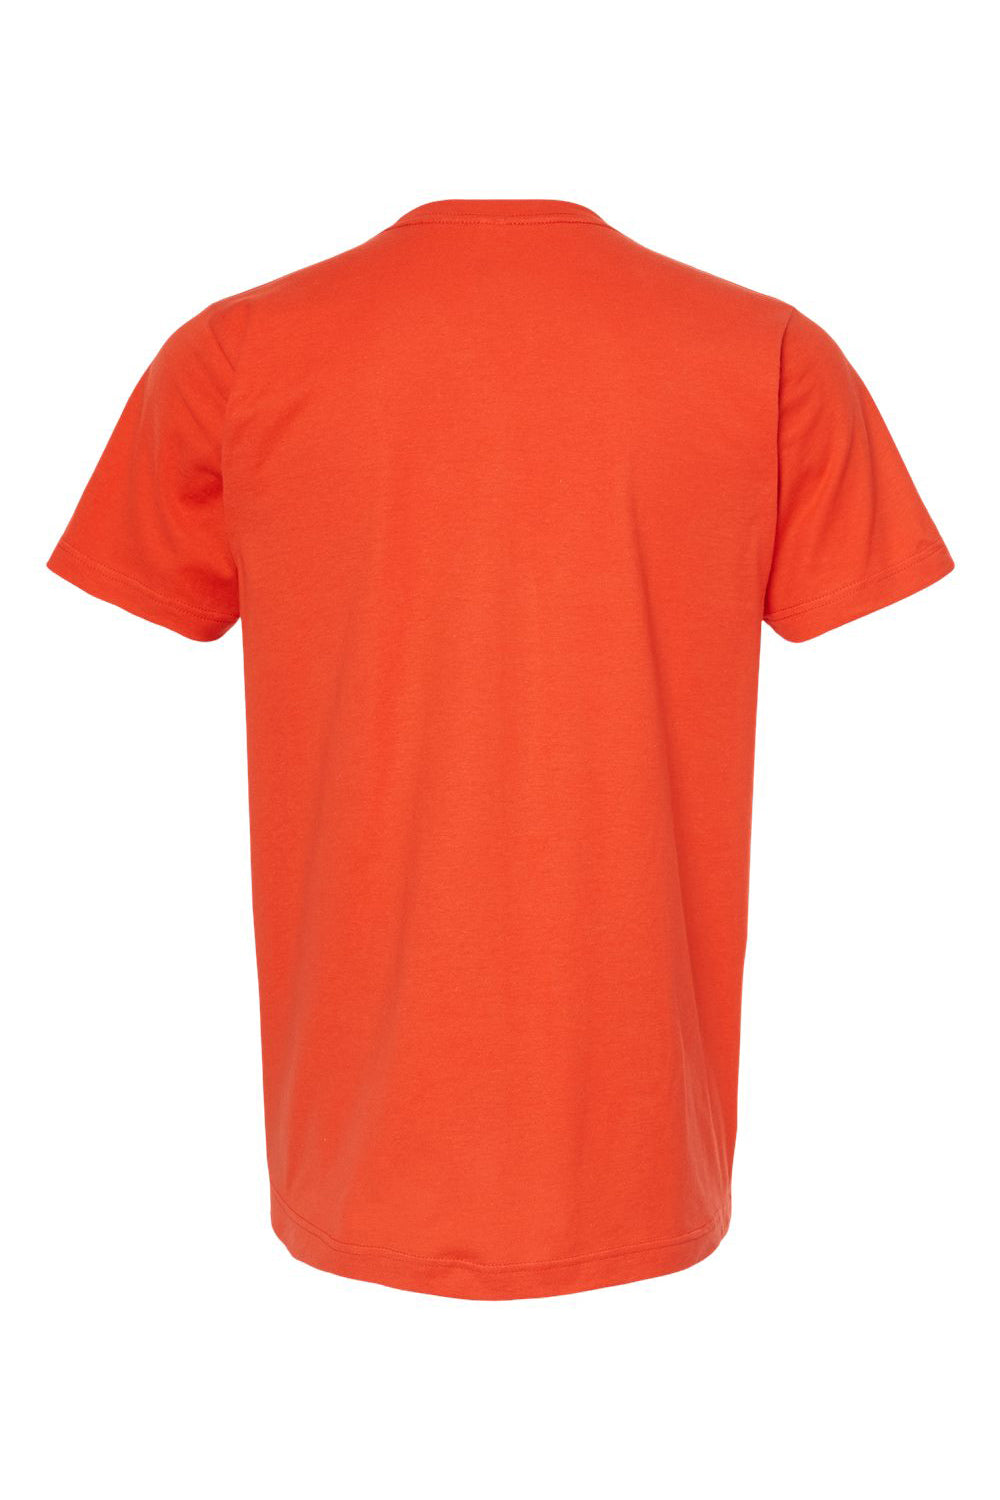 Tultex 202 Mens Fine Jersey Short Sleeve Crewneck T-Shirt Orange Flat Back